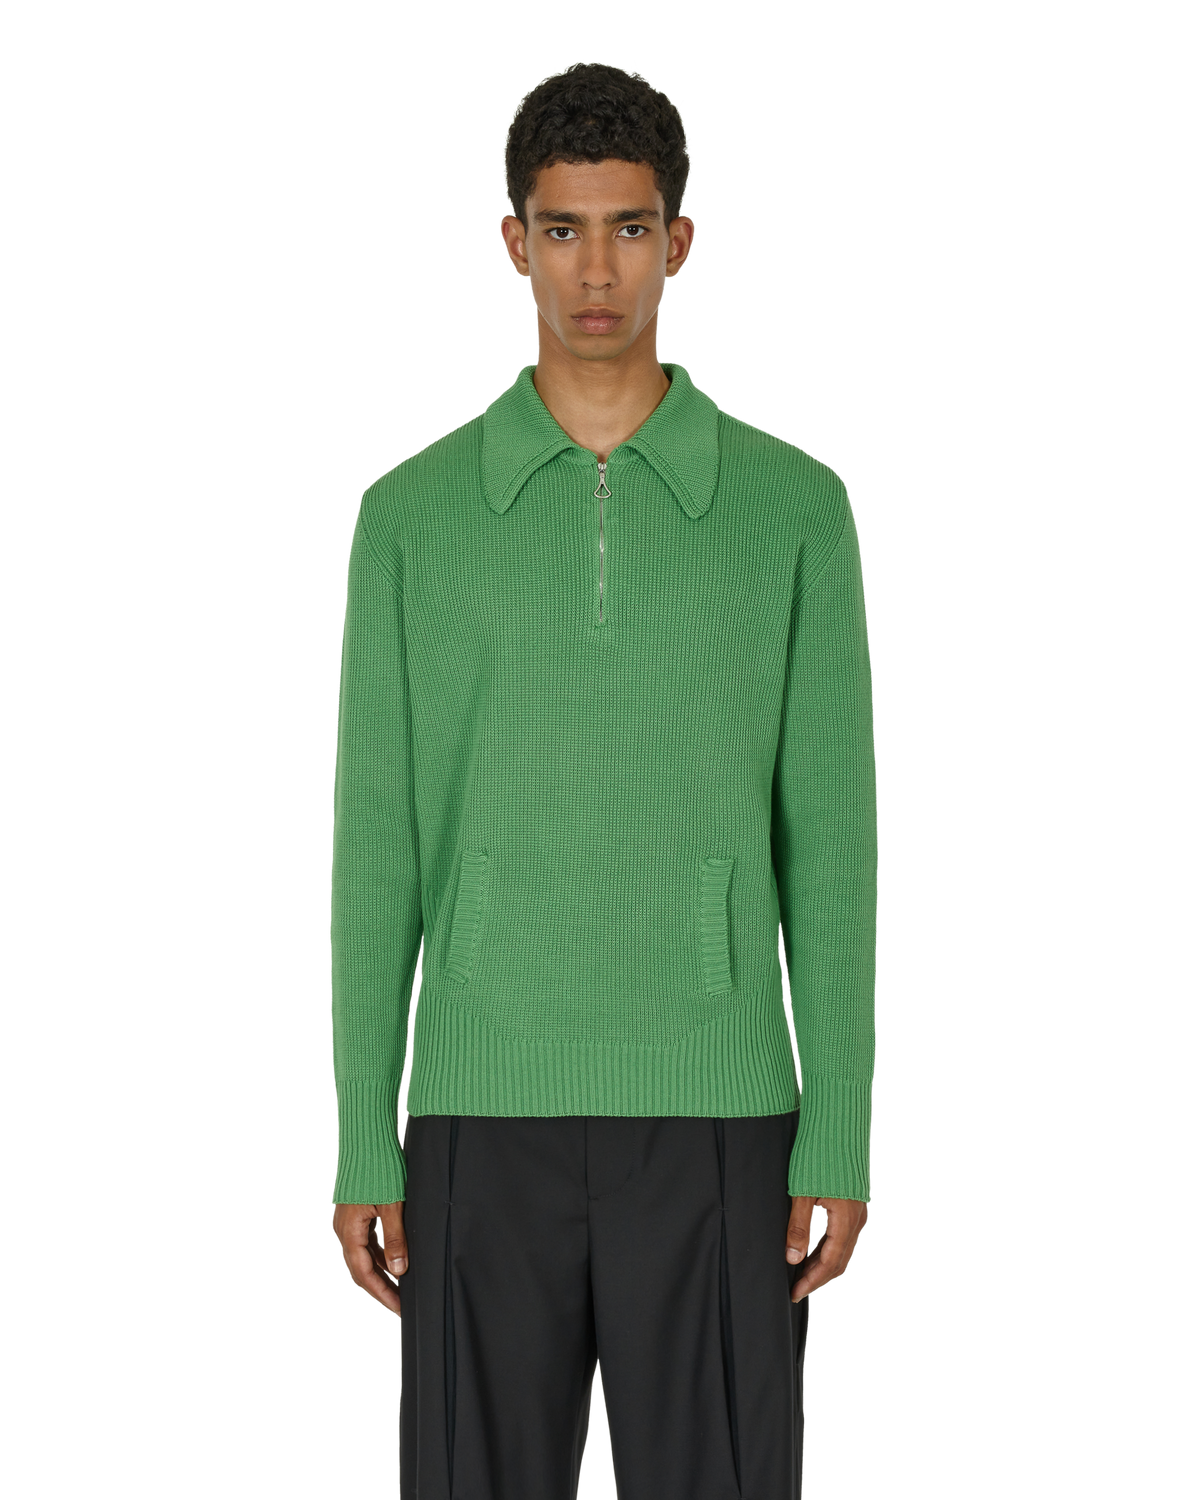 _J.L - A.L_ Lancet Zipped Sweater J277370-S-Green front